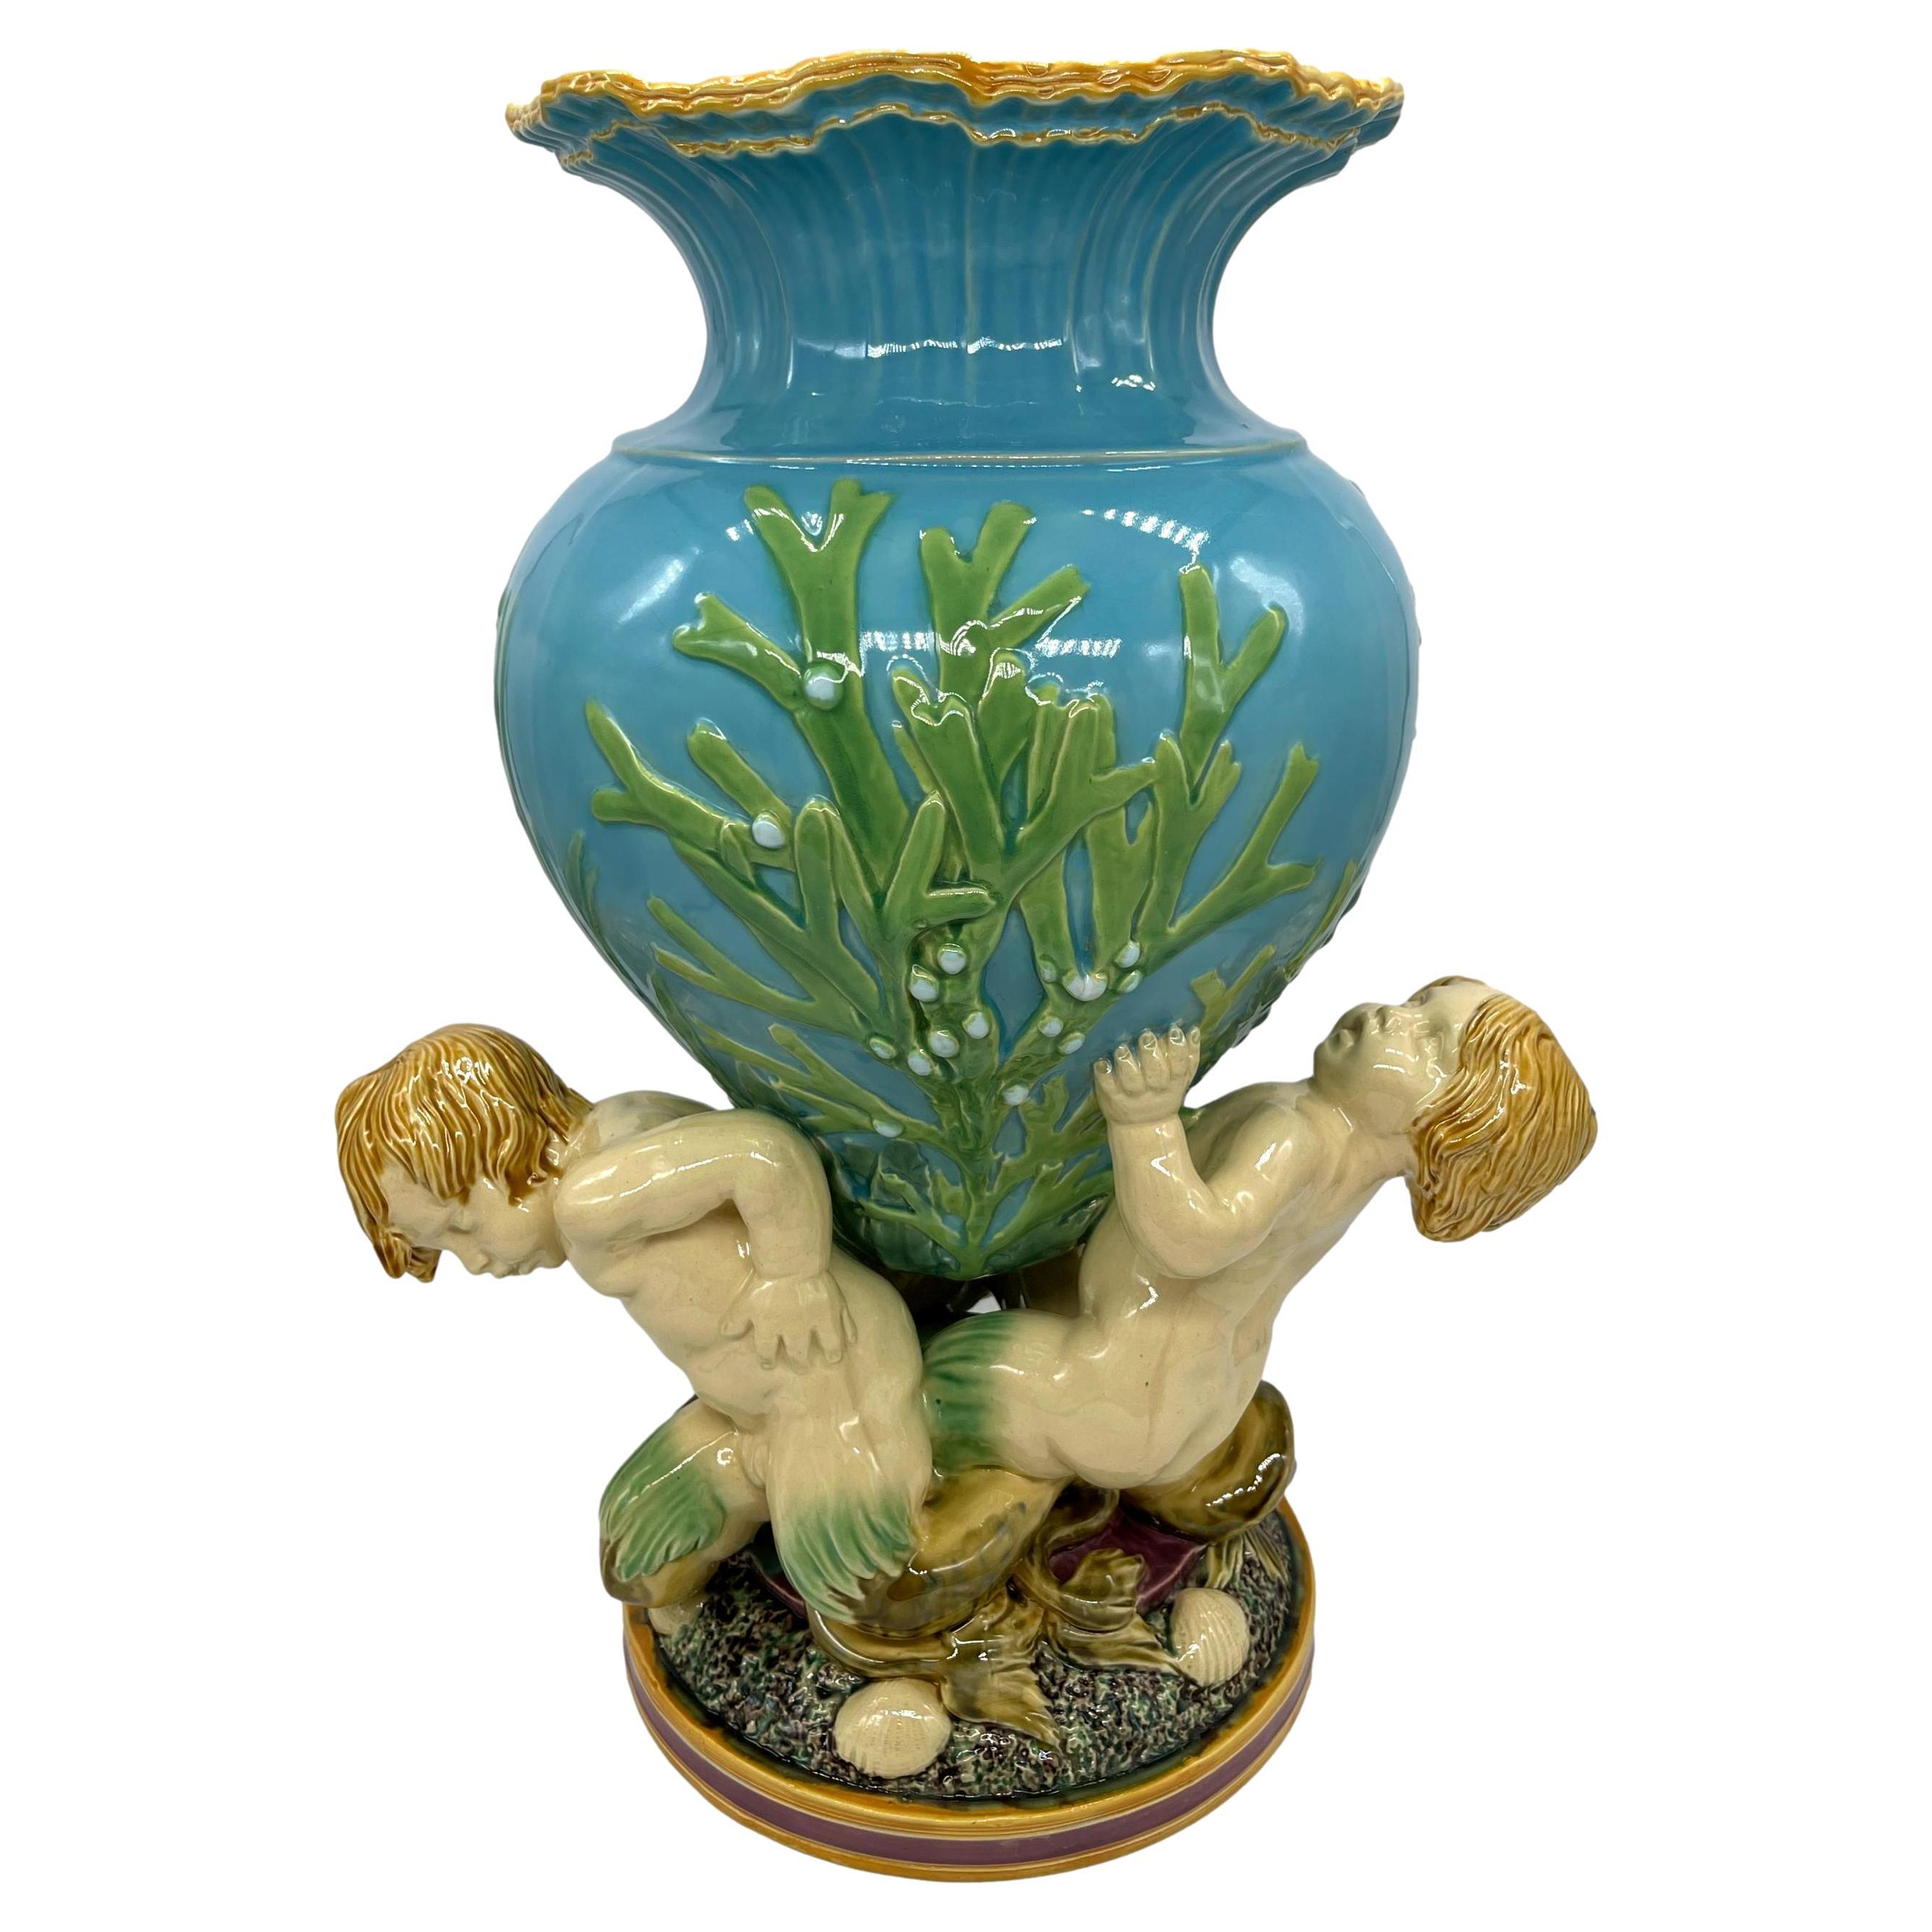 Minton Majolica Triton Marine Vase on Turquoise Ground, Dated 1868